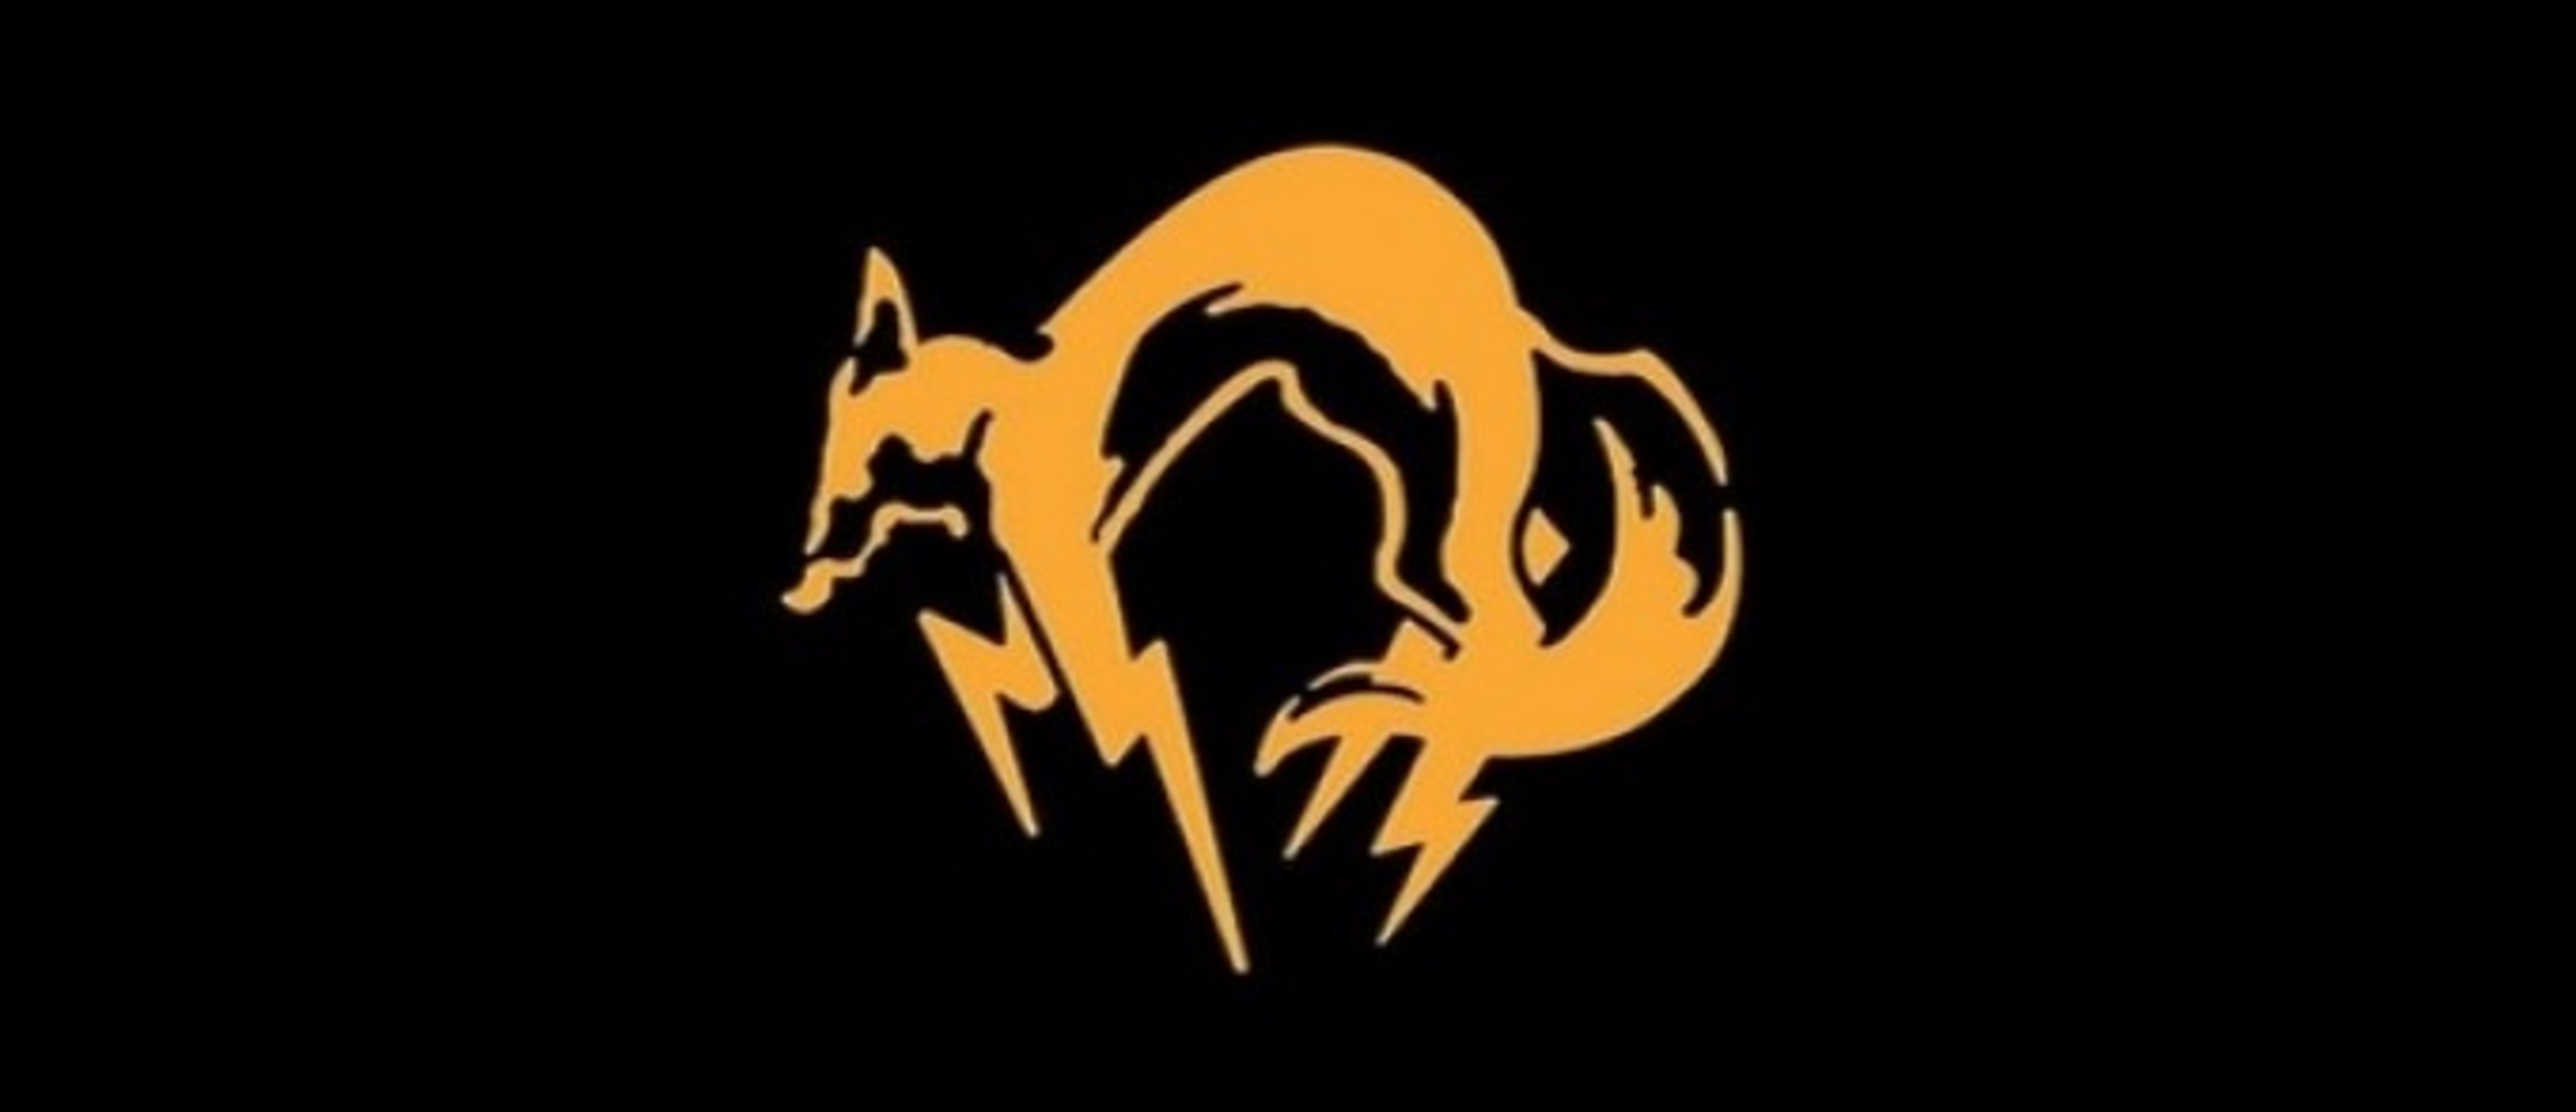 Fox hound. Фоксхаунд метал Гир. Metal Gear Solid Foxhound. Foxhound отряд. Эмблема фоксхаунд.